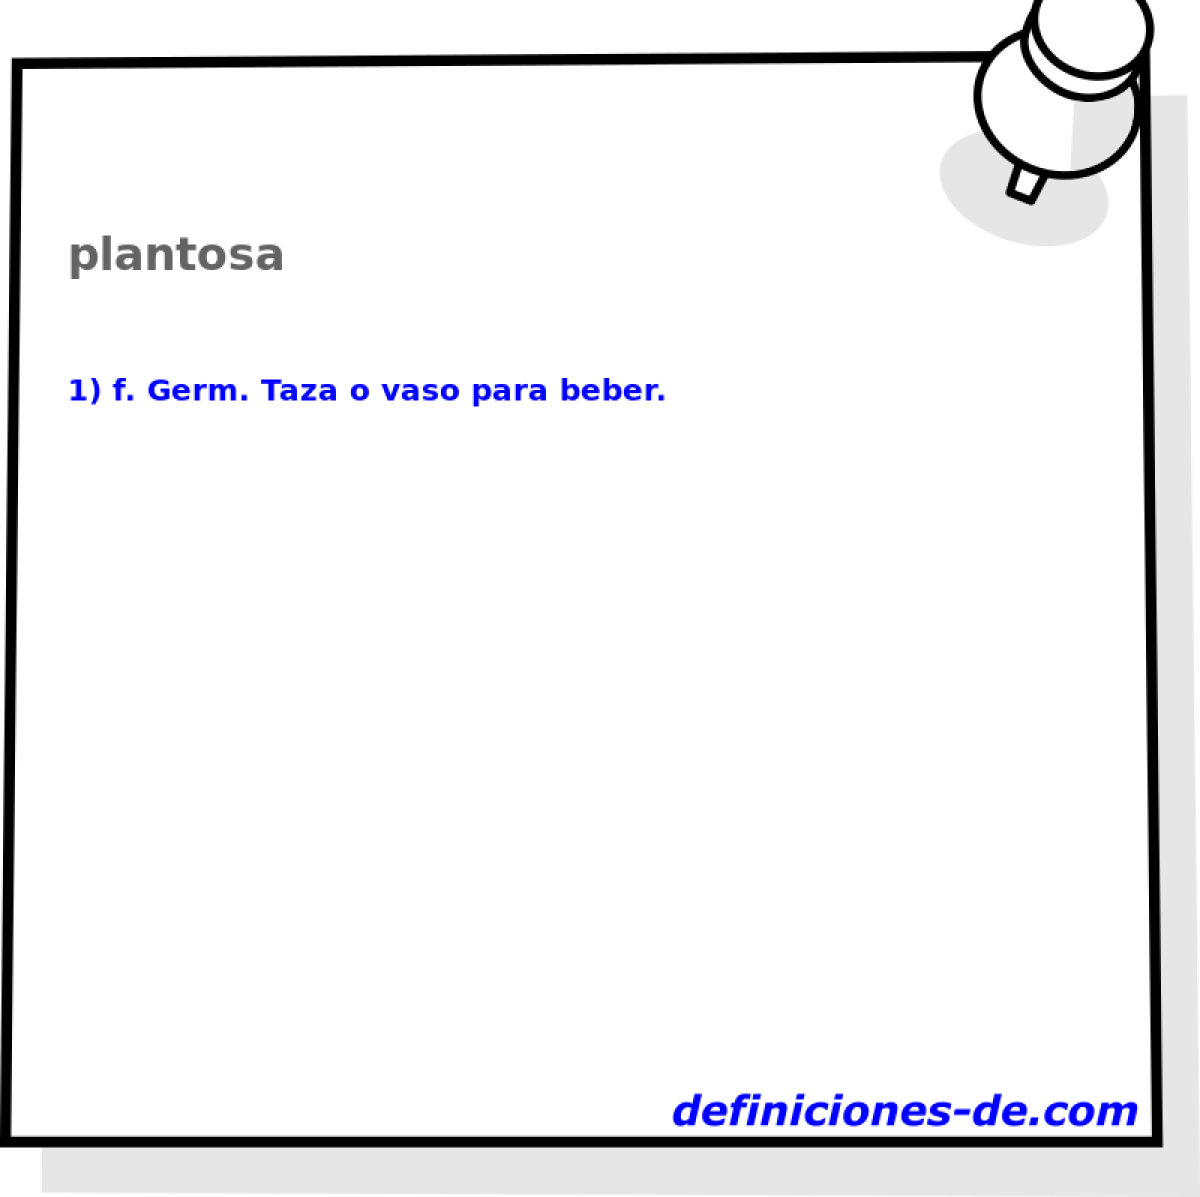 plantosa 